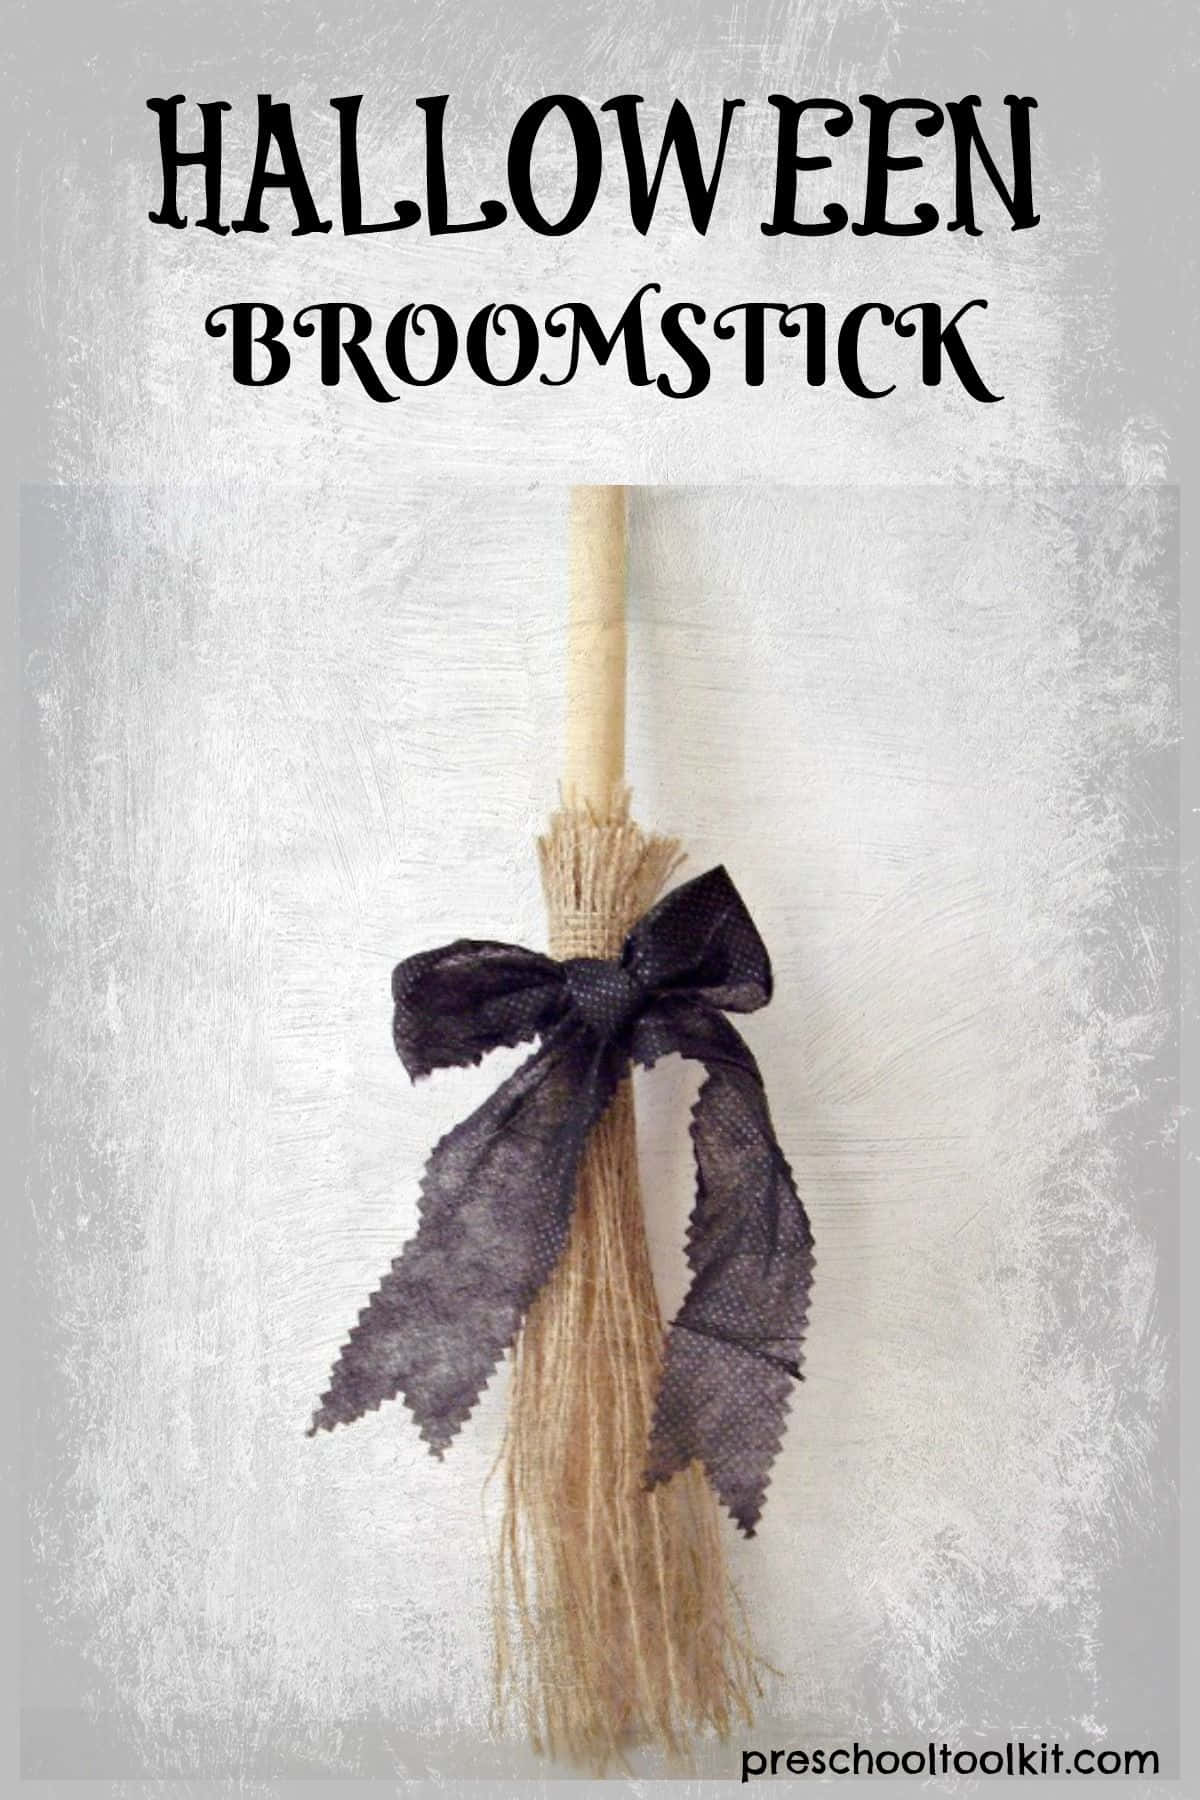 Broom Stick Pictures